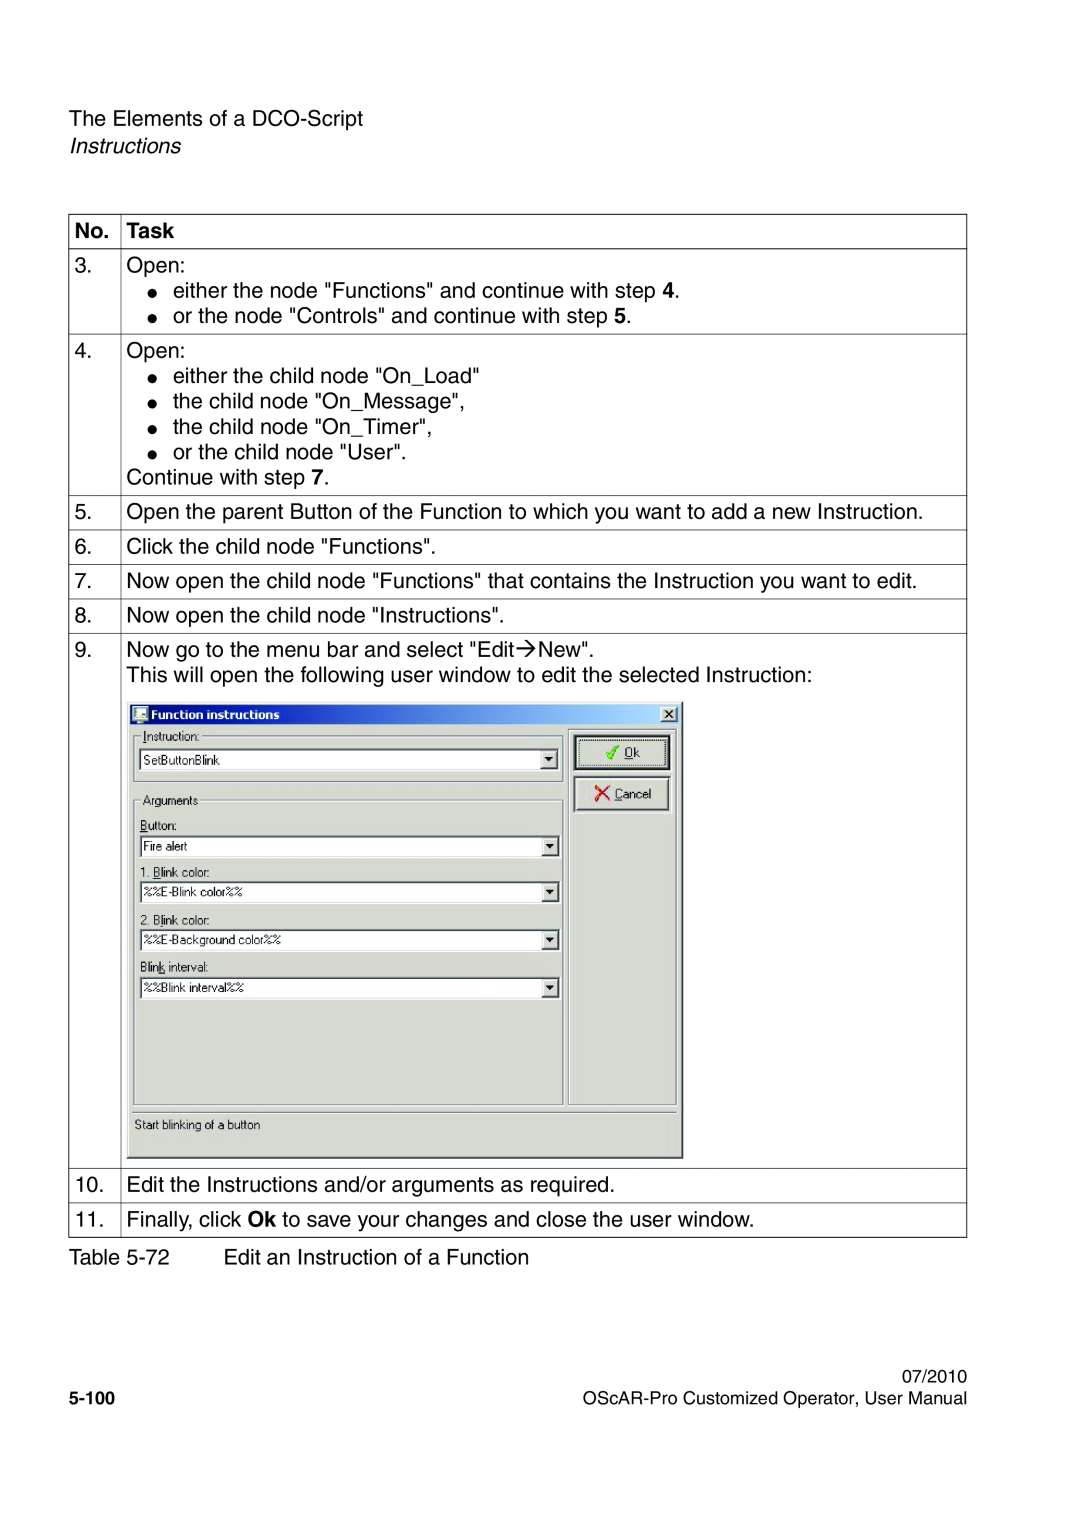 Siemens A31003-51730-U103-7619 user manual The Elements of a DCO-Script, Instructions, Task 